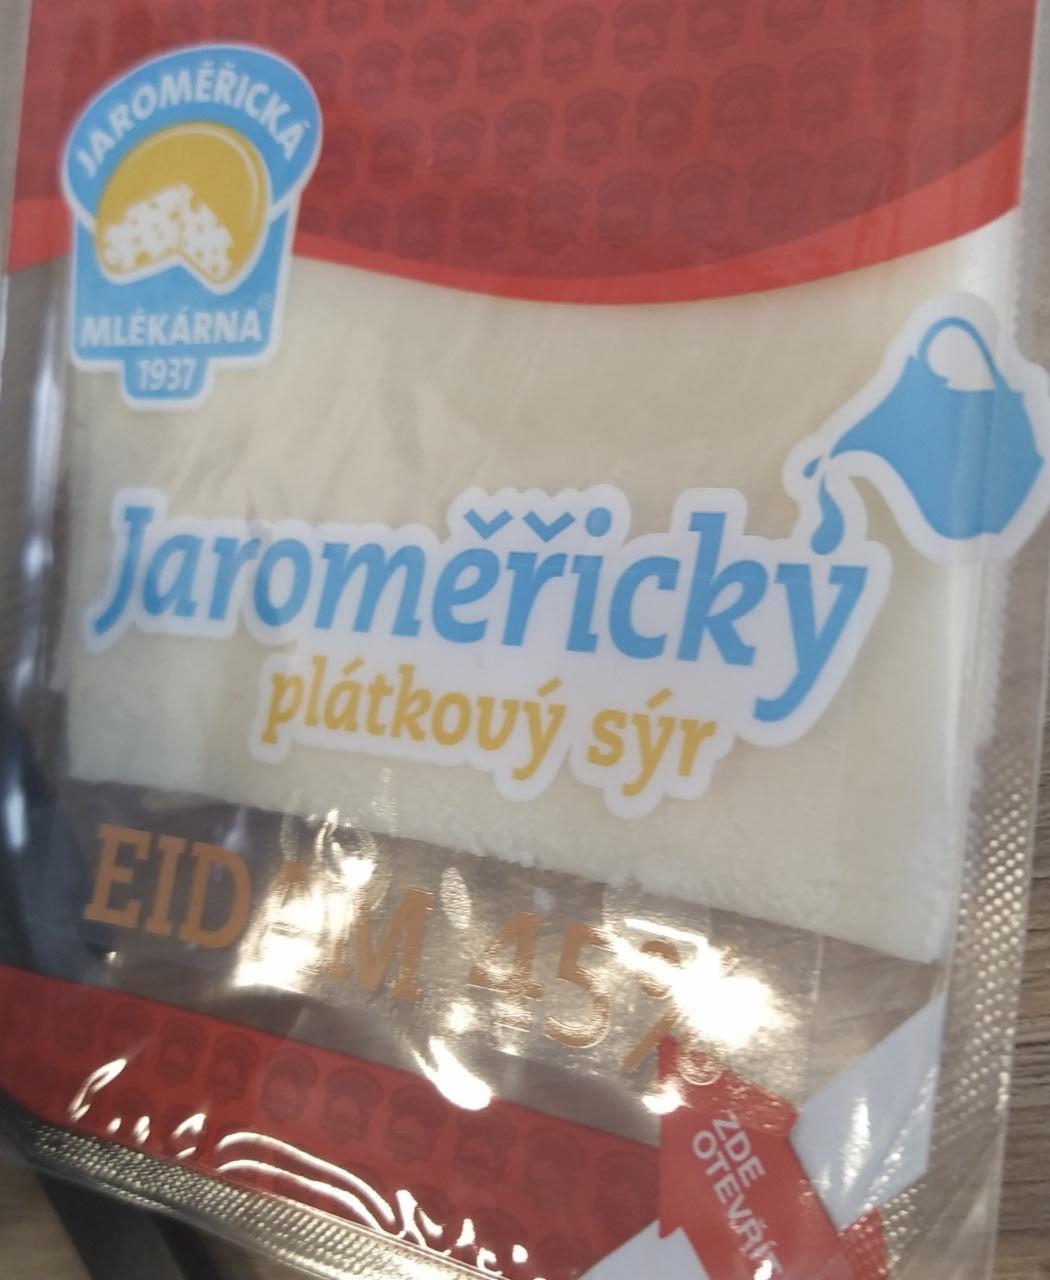 Fotografie - Jaroměřický plátkový sýr Eidam 45% Jaroměřická mlékárna